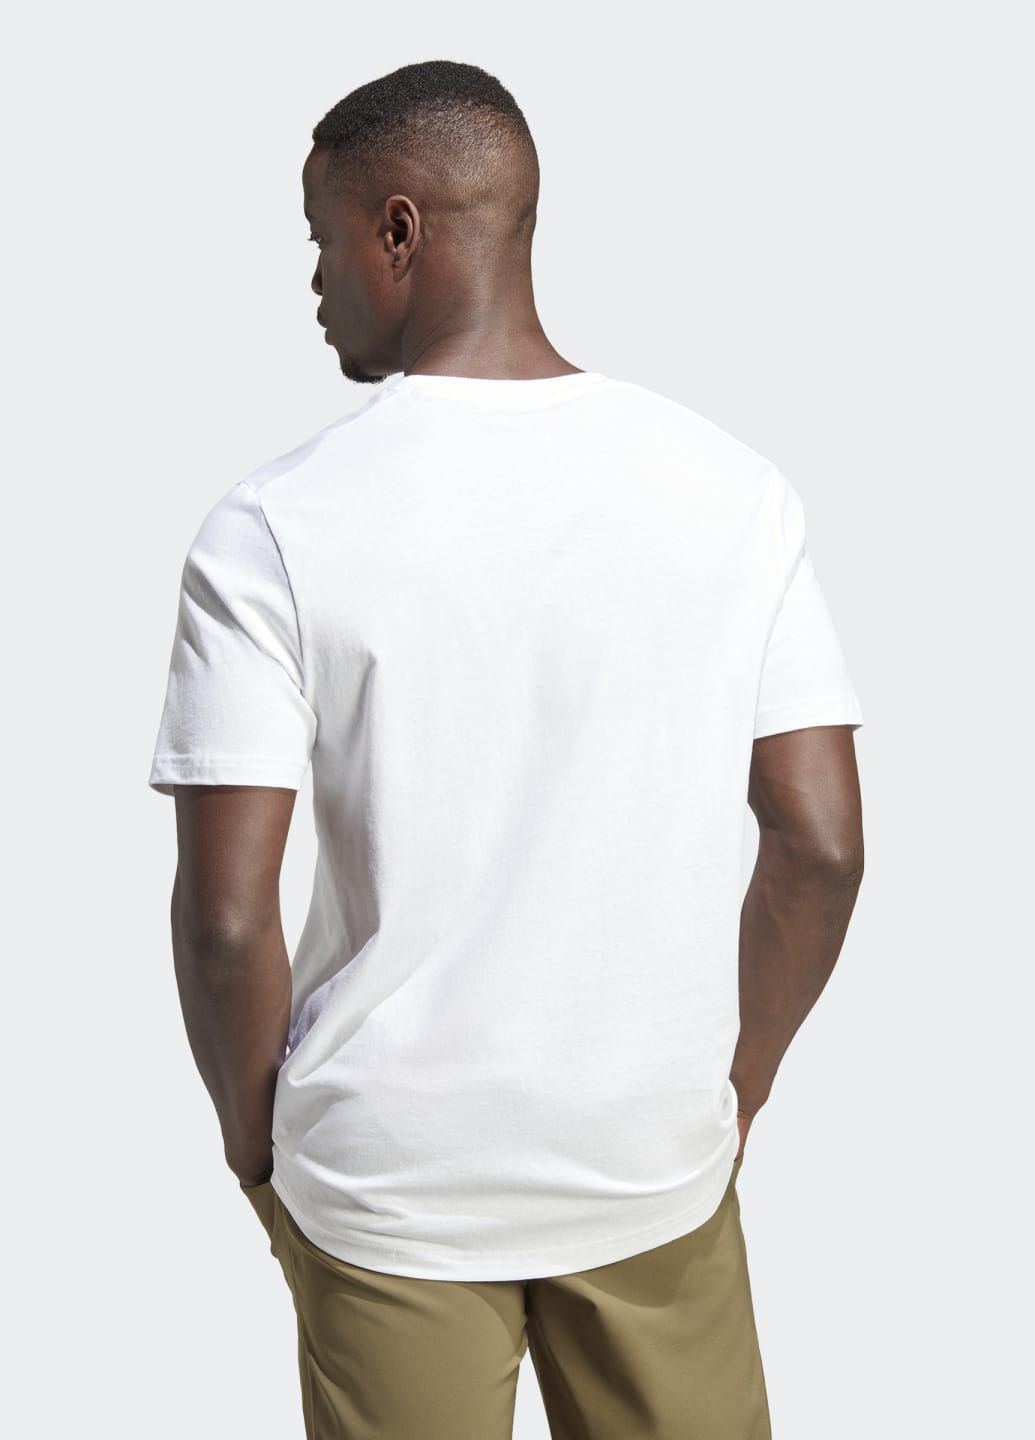 Біла футболка terrex classic logo adidas